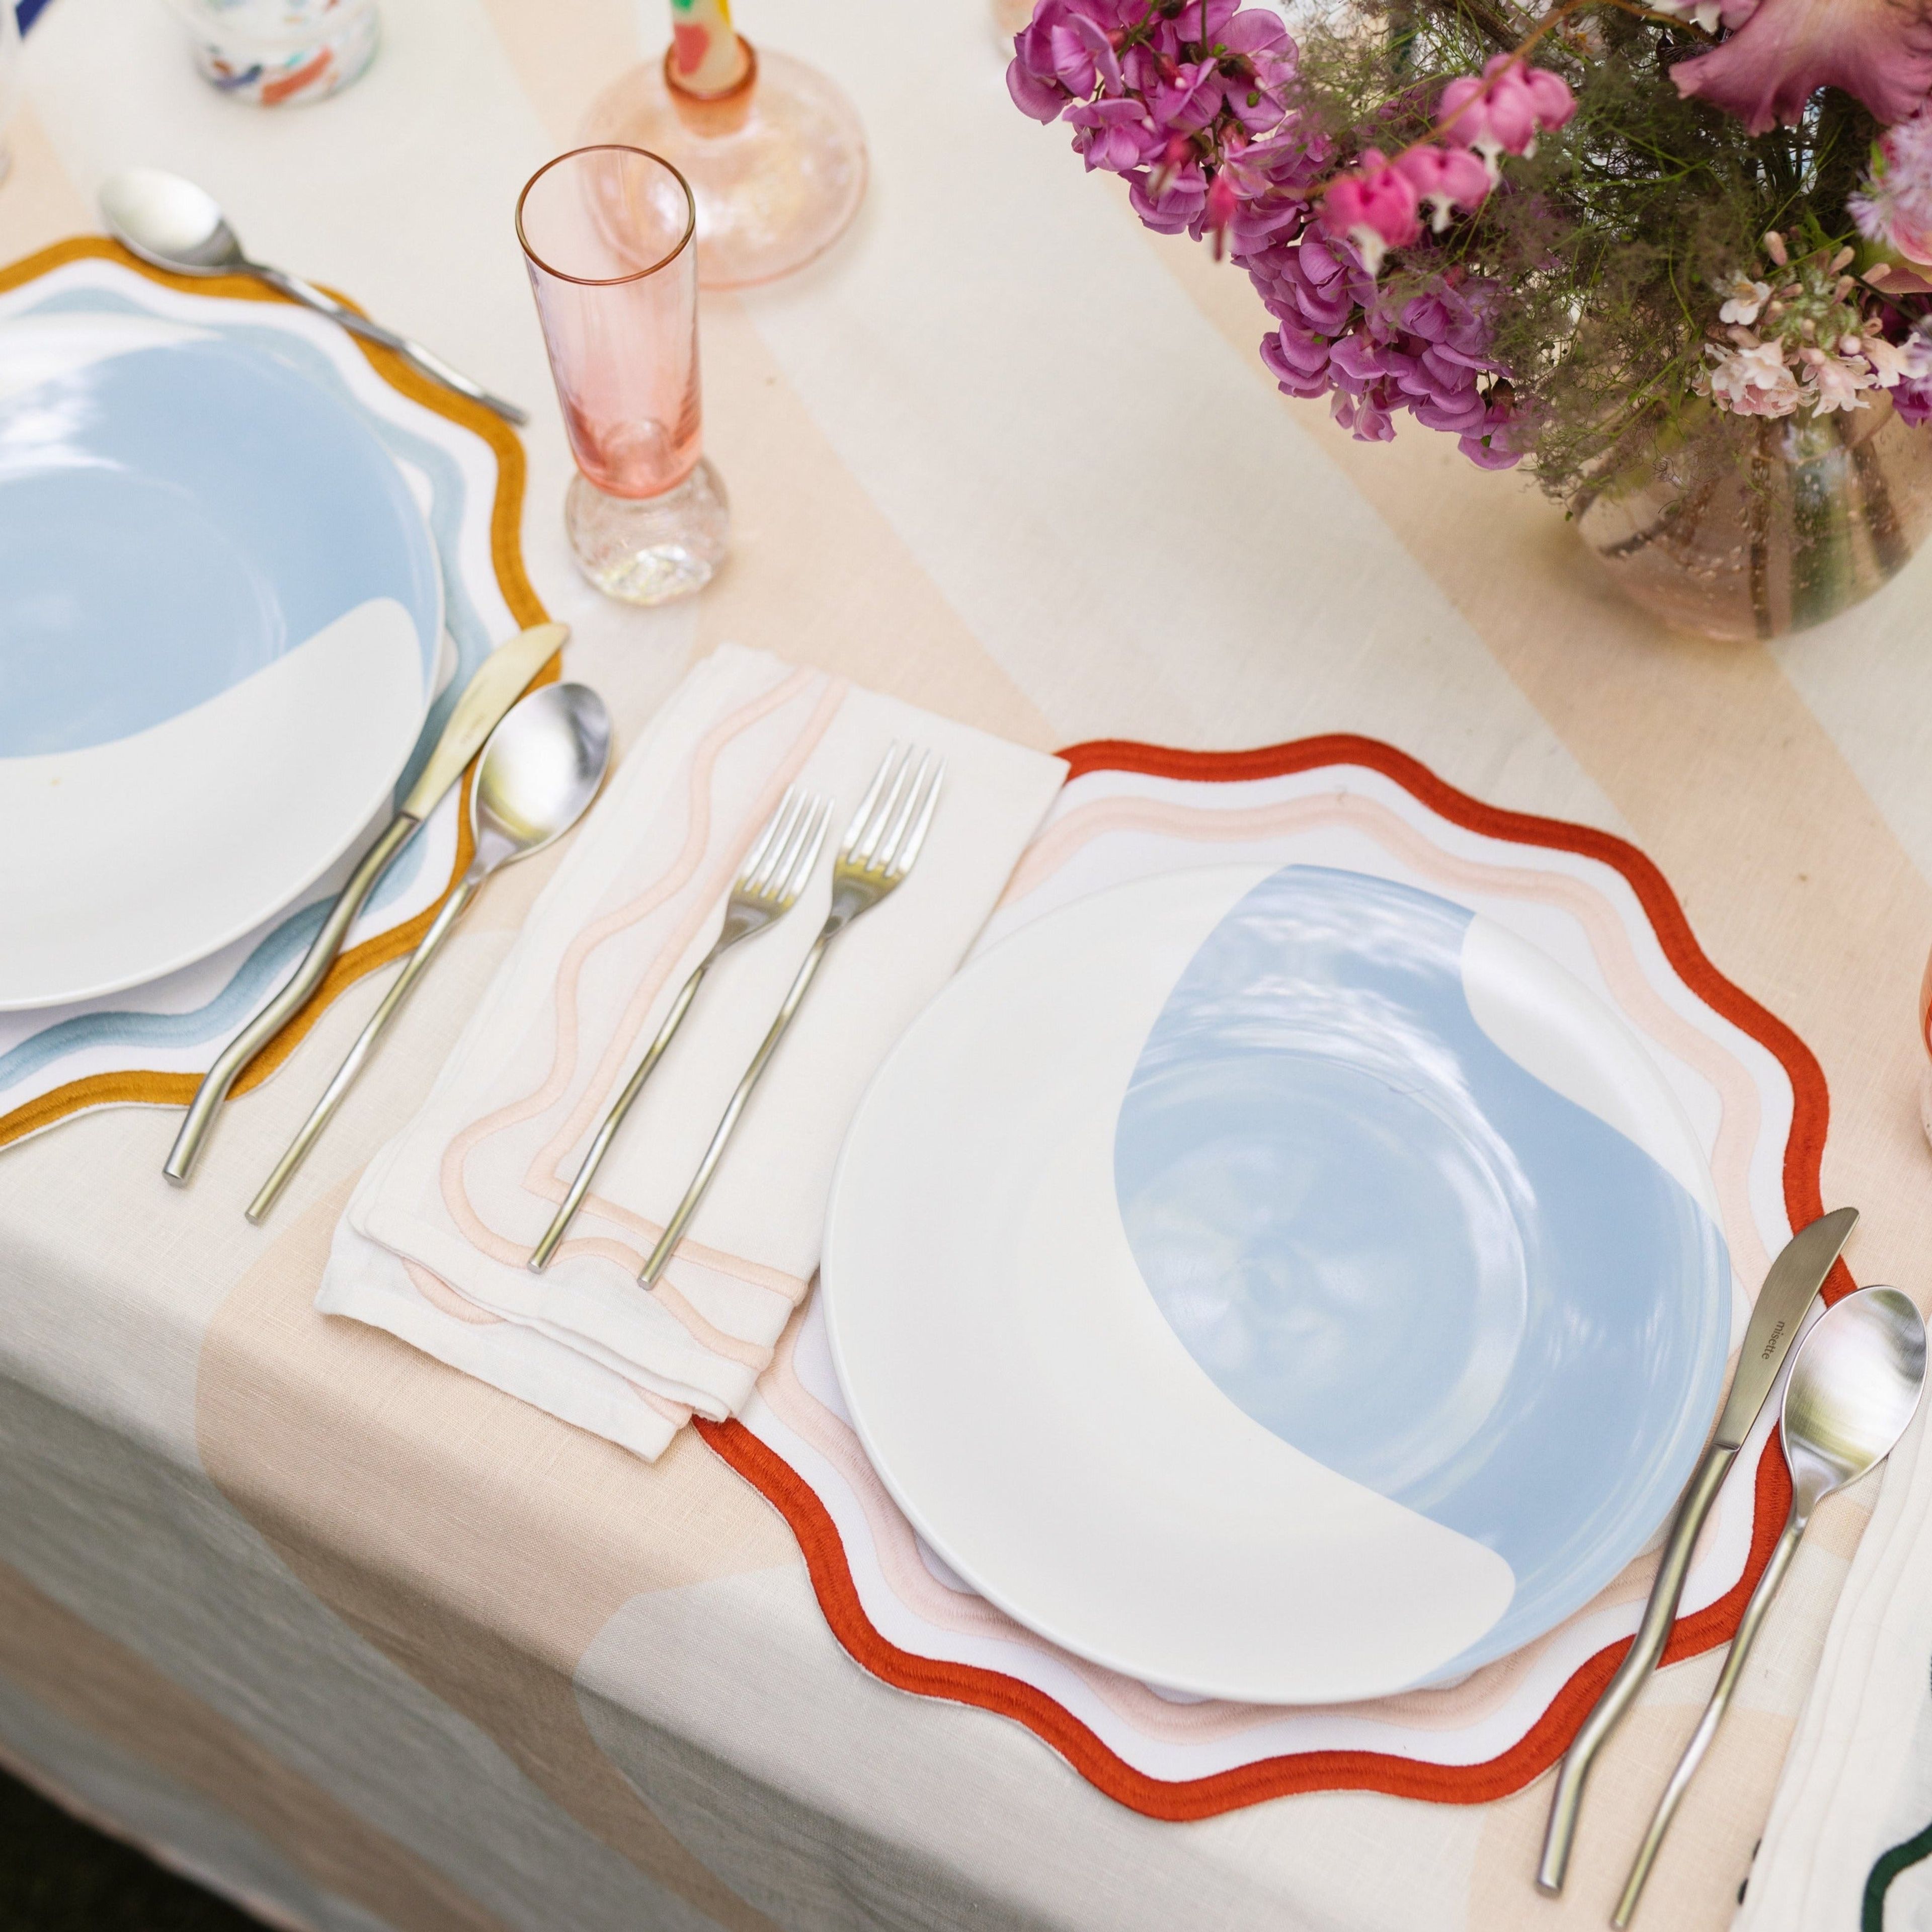 Colorblock Dinner Plates (Set of 4)